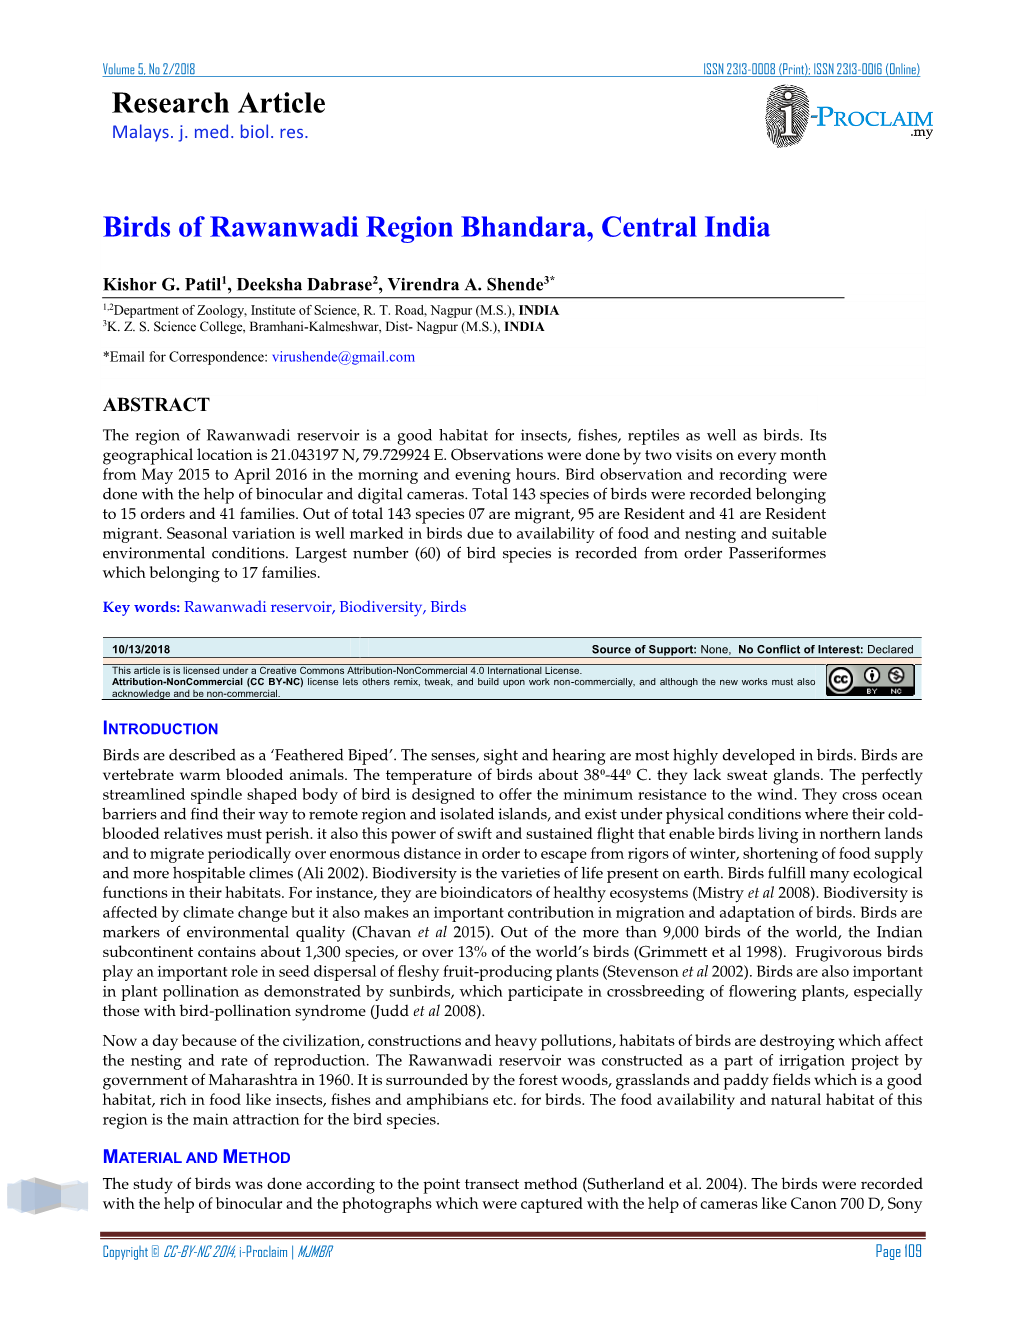 Research Article Birds of Rawanwadi Region Bhandara, Central India